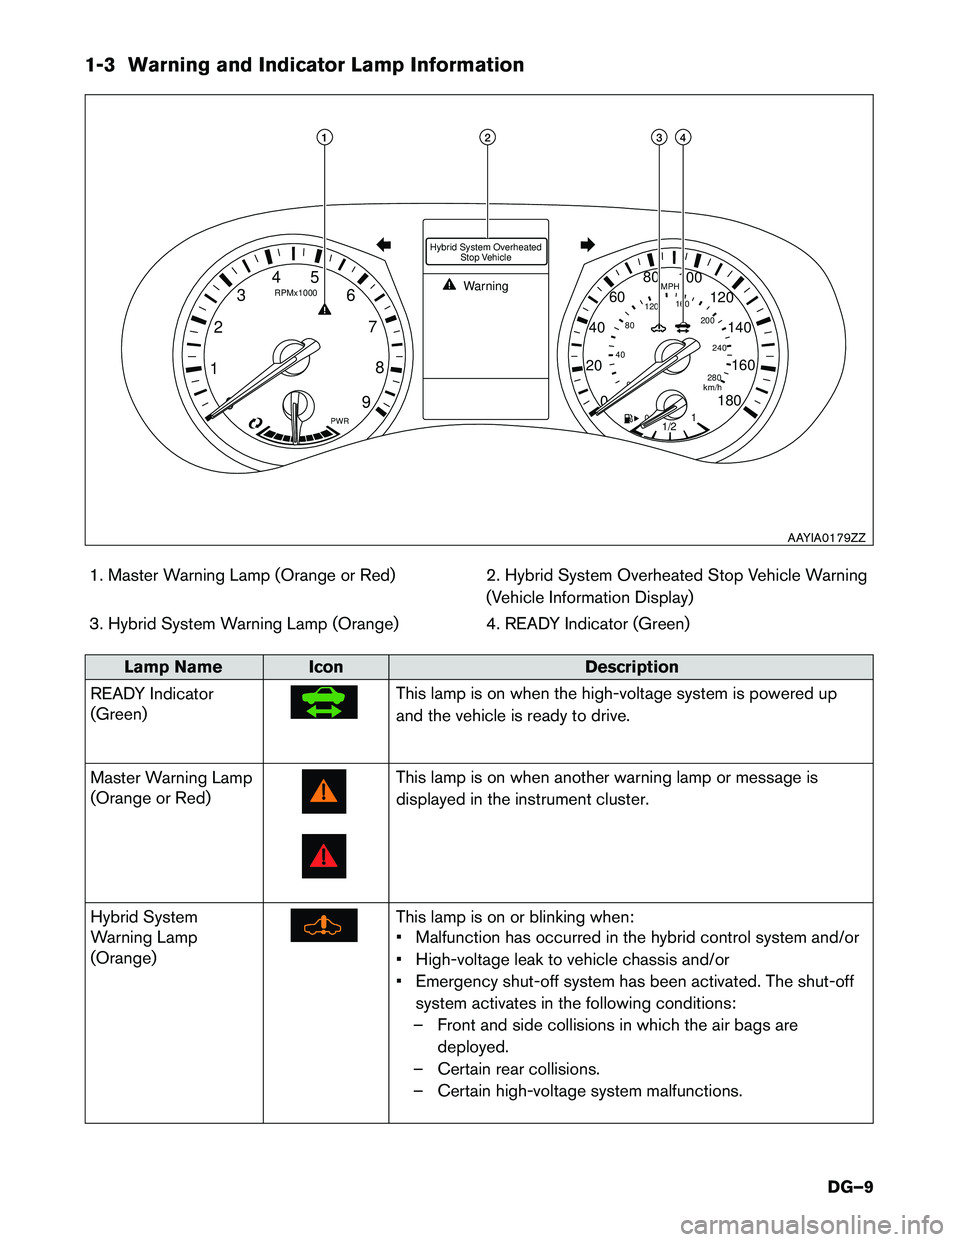 INFINITI Q50 HYBRID 2017  Dismantling Guide 1-3 Warning and Indicator Lamp Information
1. Master Warning Lamp (Orange or Red) 2. Hybrid System Overheated Stop Vehicle Warning
(Vehicle Information Display)
3. Hybrid System Warning Lamp (Orange) 